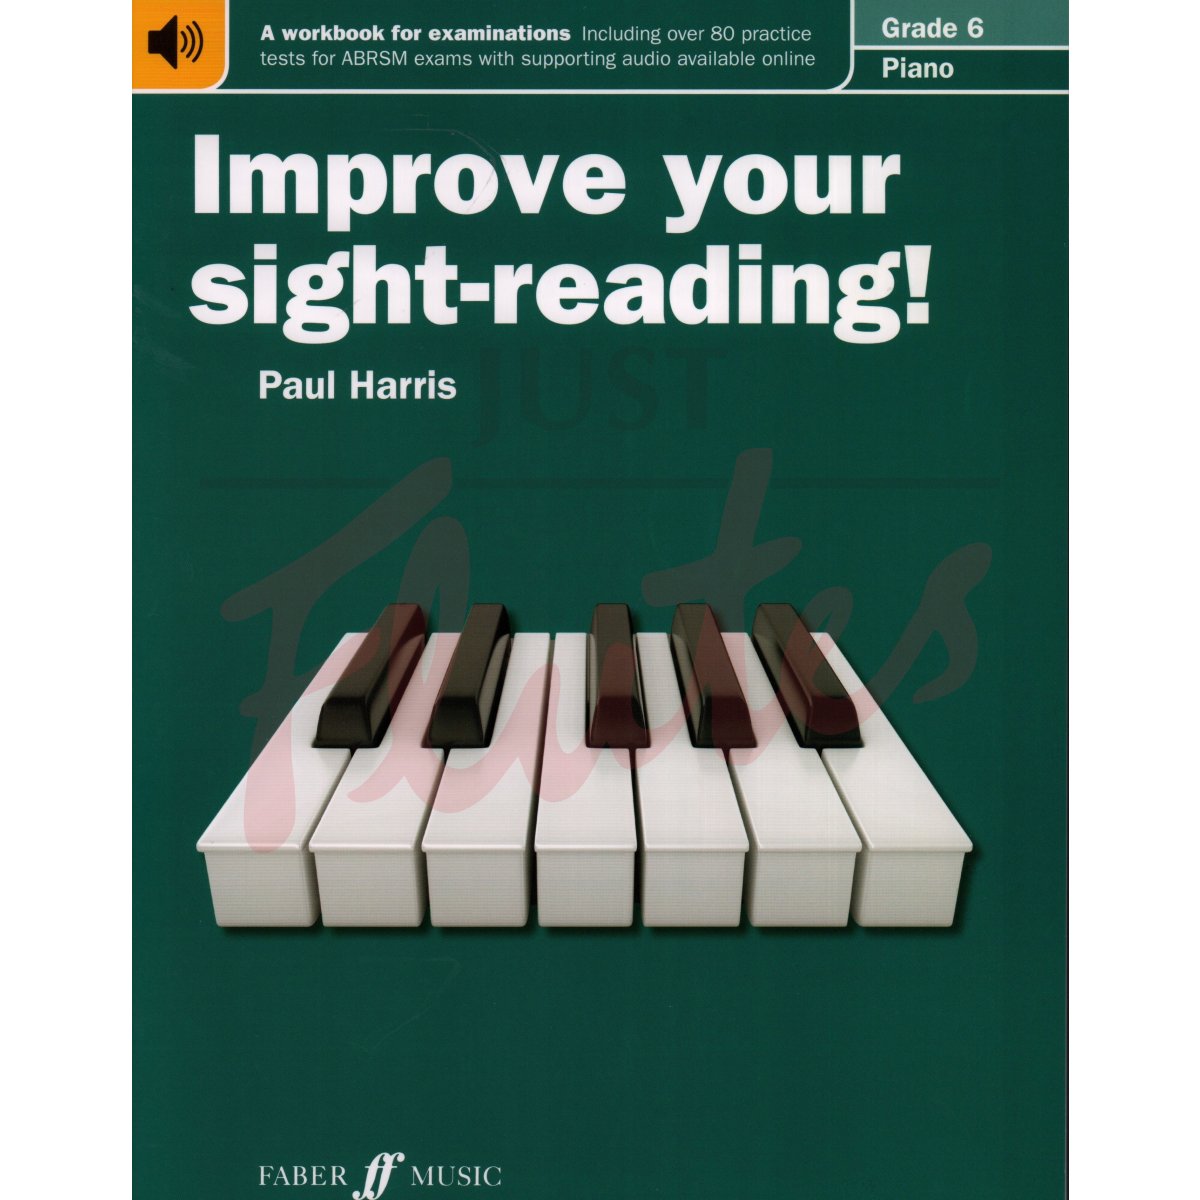 Improve Your Sight-Reading! [Piano] Grade 6